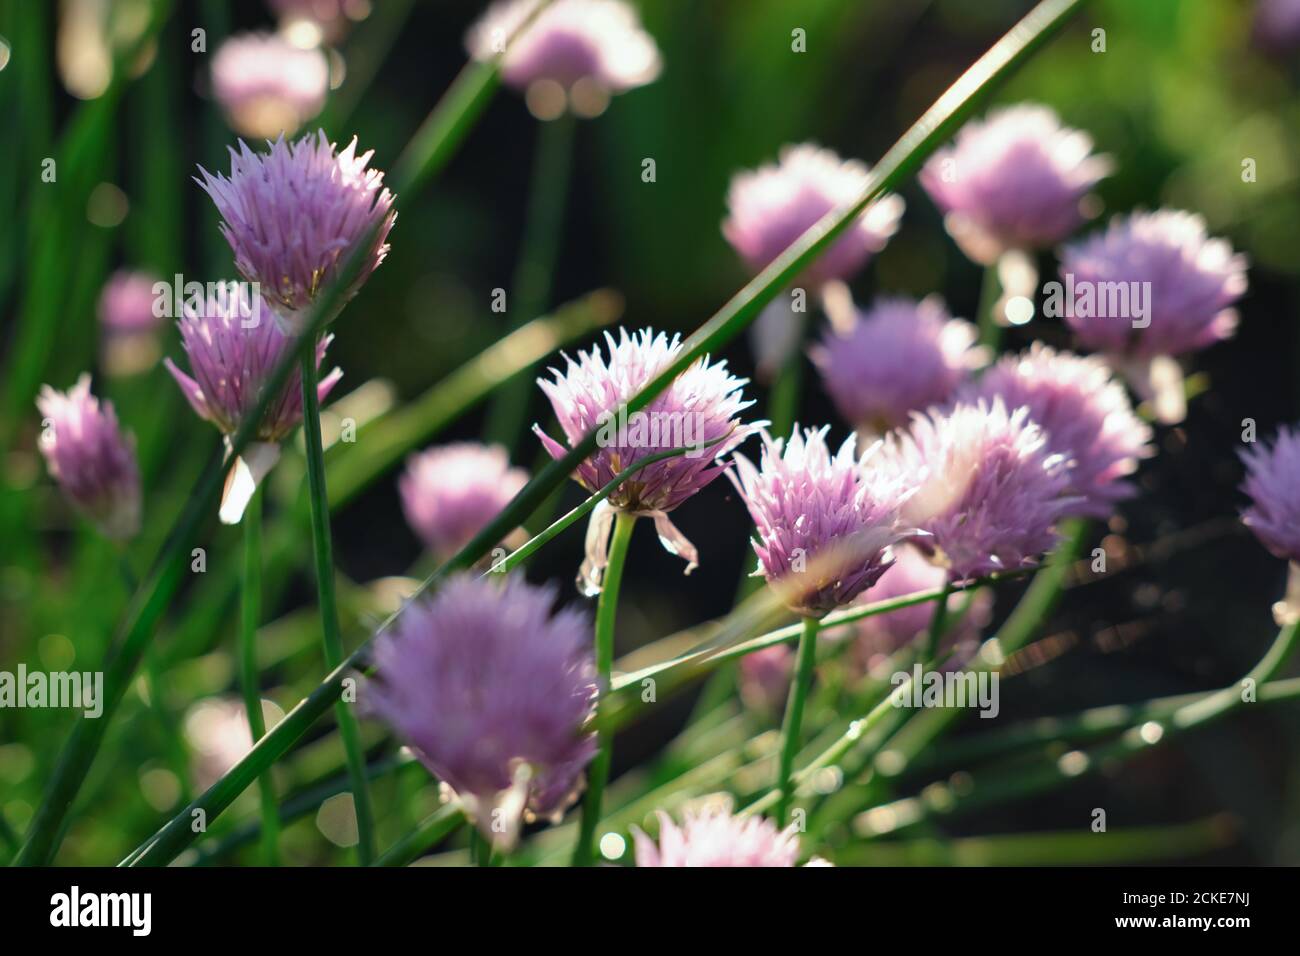 Wild onion flower bulbs. Allium flowers. Inflorescence of decorative onion in the garden. ornamental garden plant, large round purple flower close-up, flowering onions.  Stock Photo